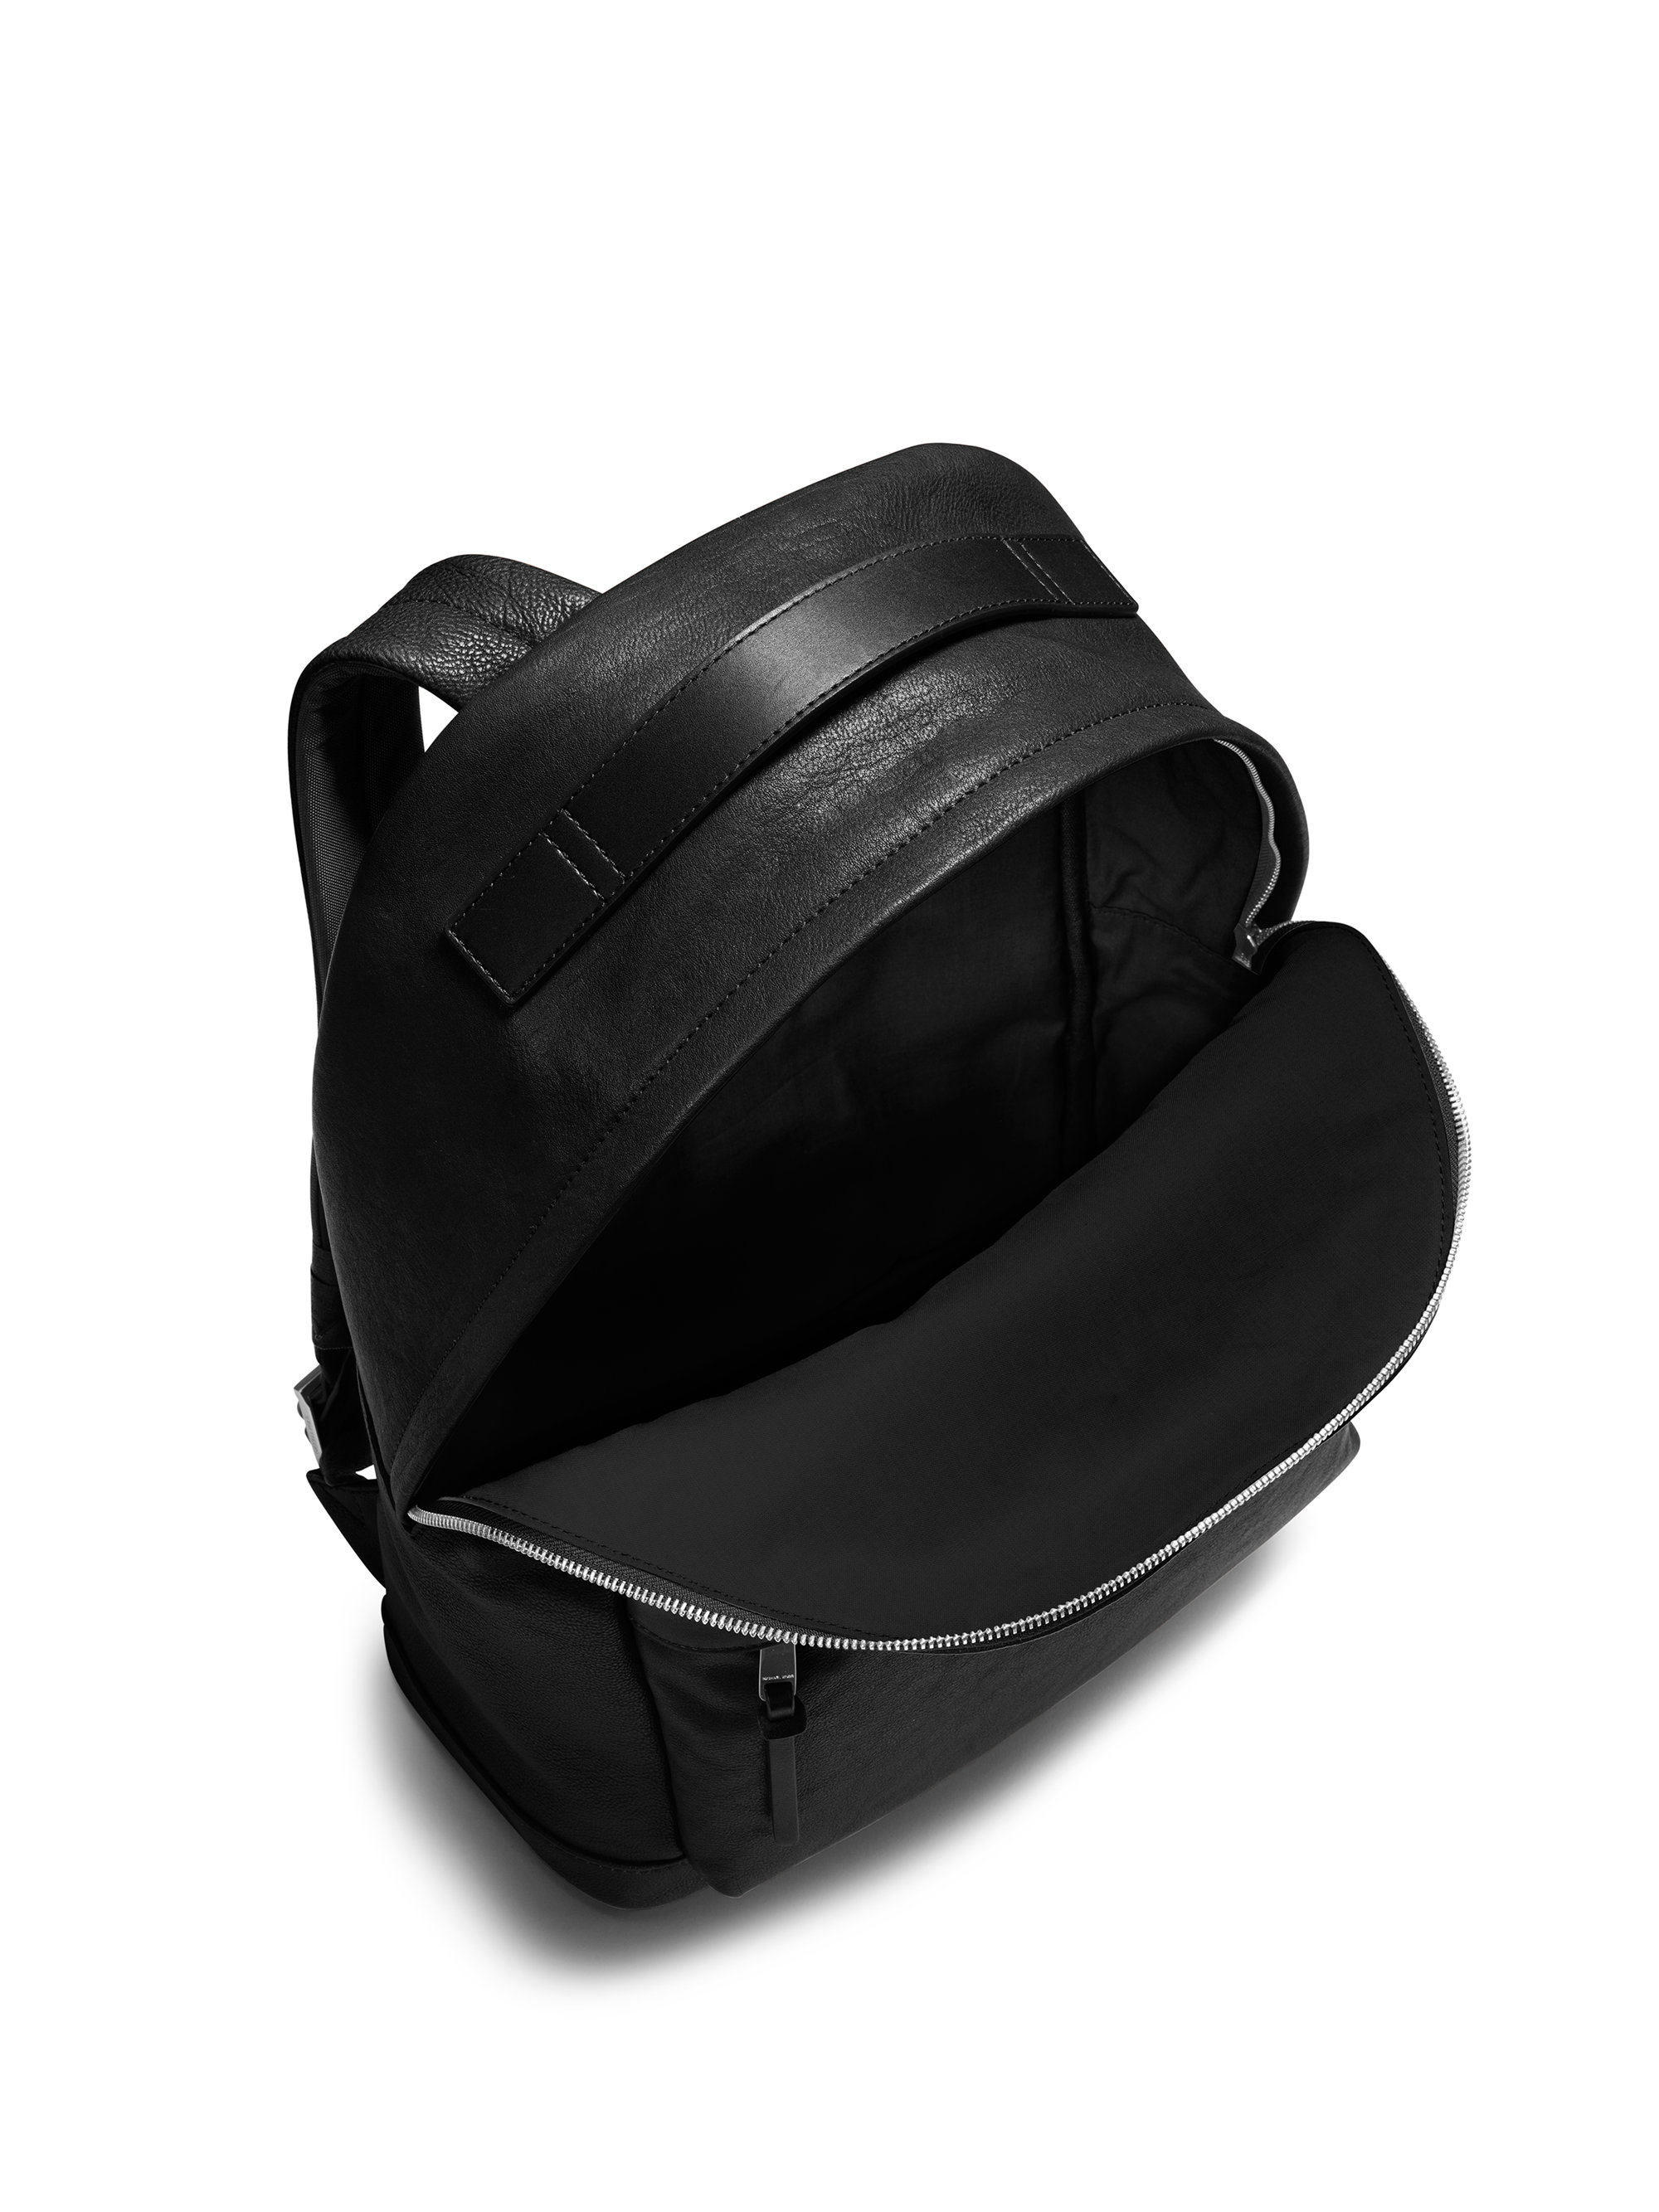 Lyst - Michael Kors Lavato Leather Backpack in Black for Men